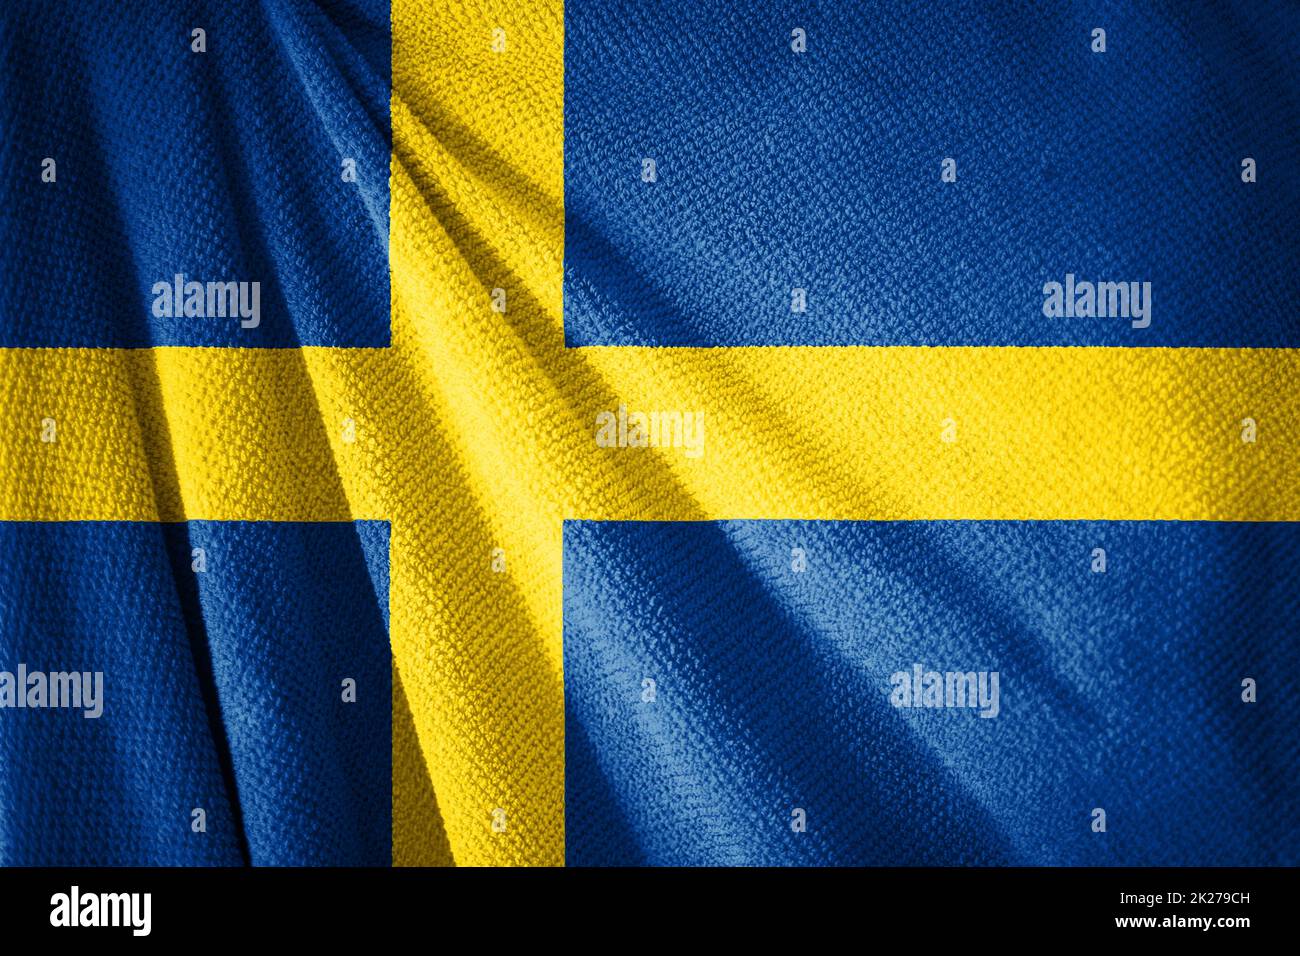 Swedish flag on towel surface illustration with Stock Photo